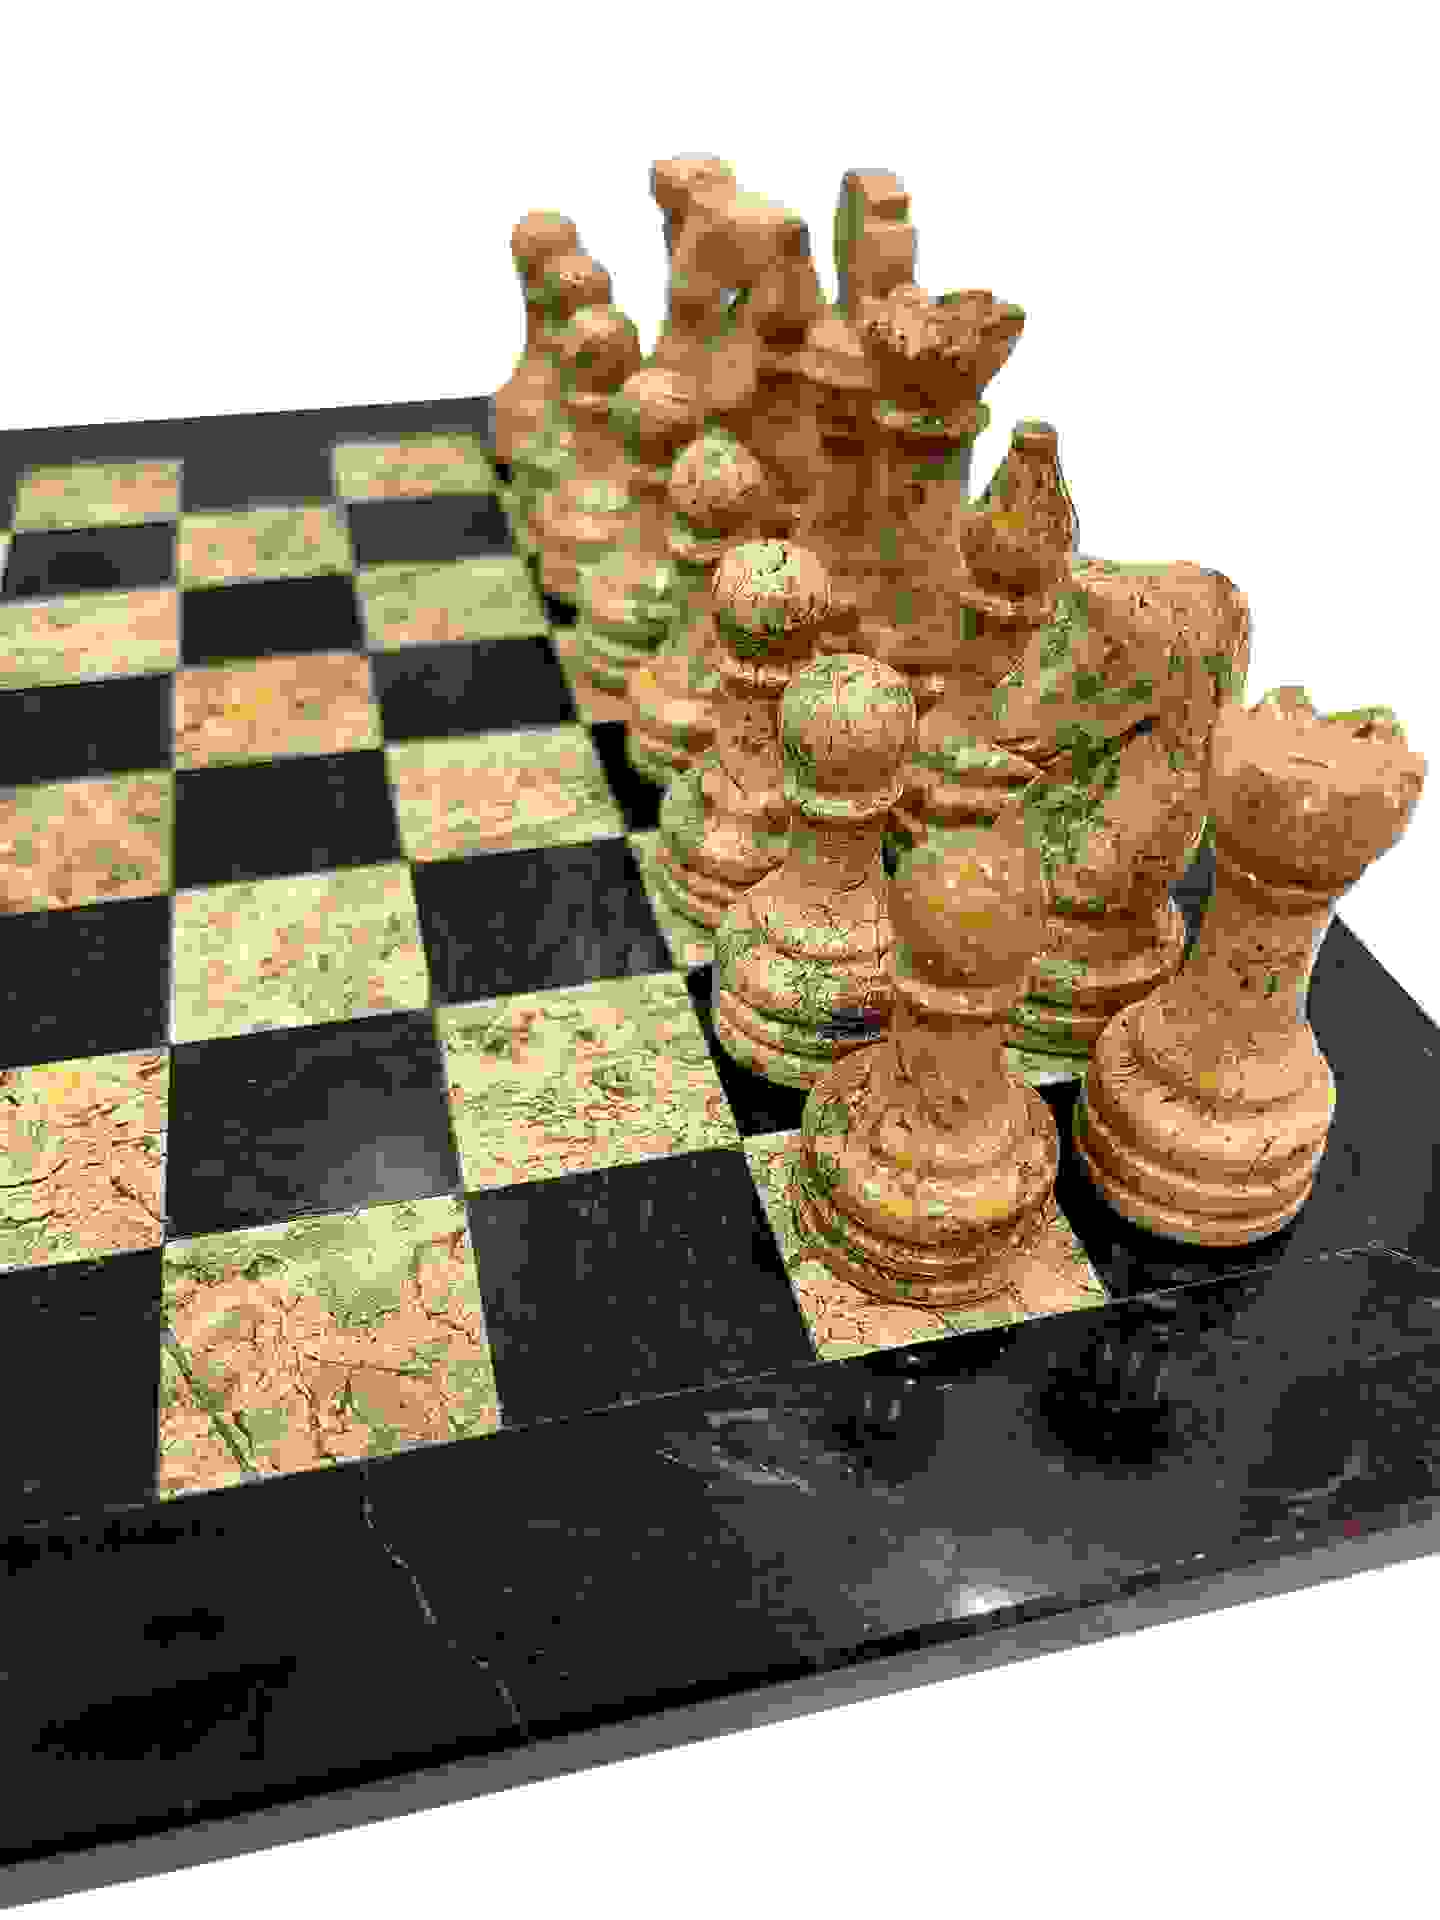 Italfama Chess Set 1009 Black Brown Marble 30cm